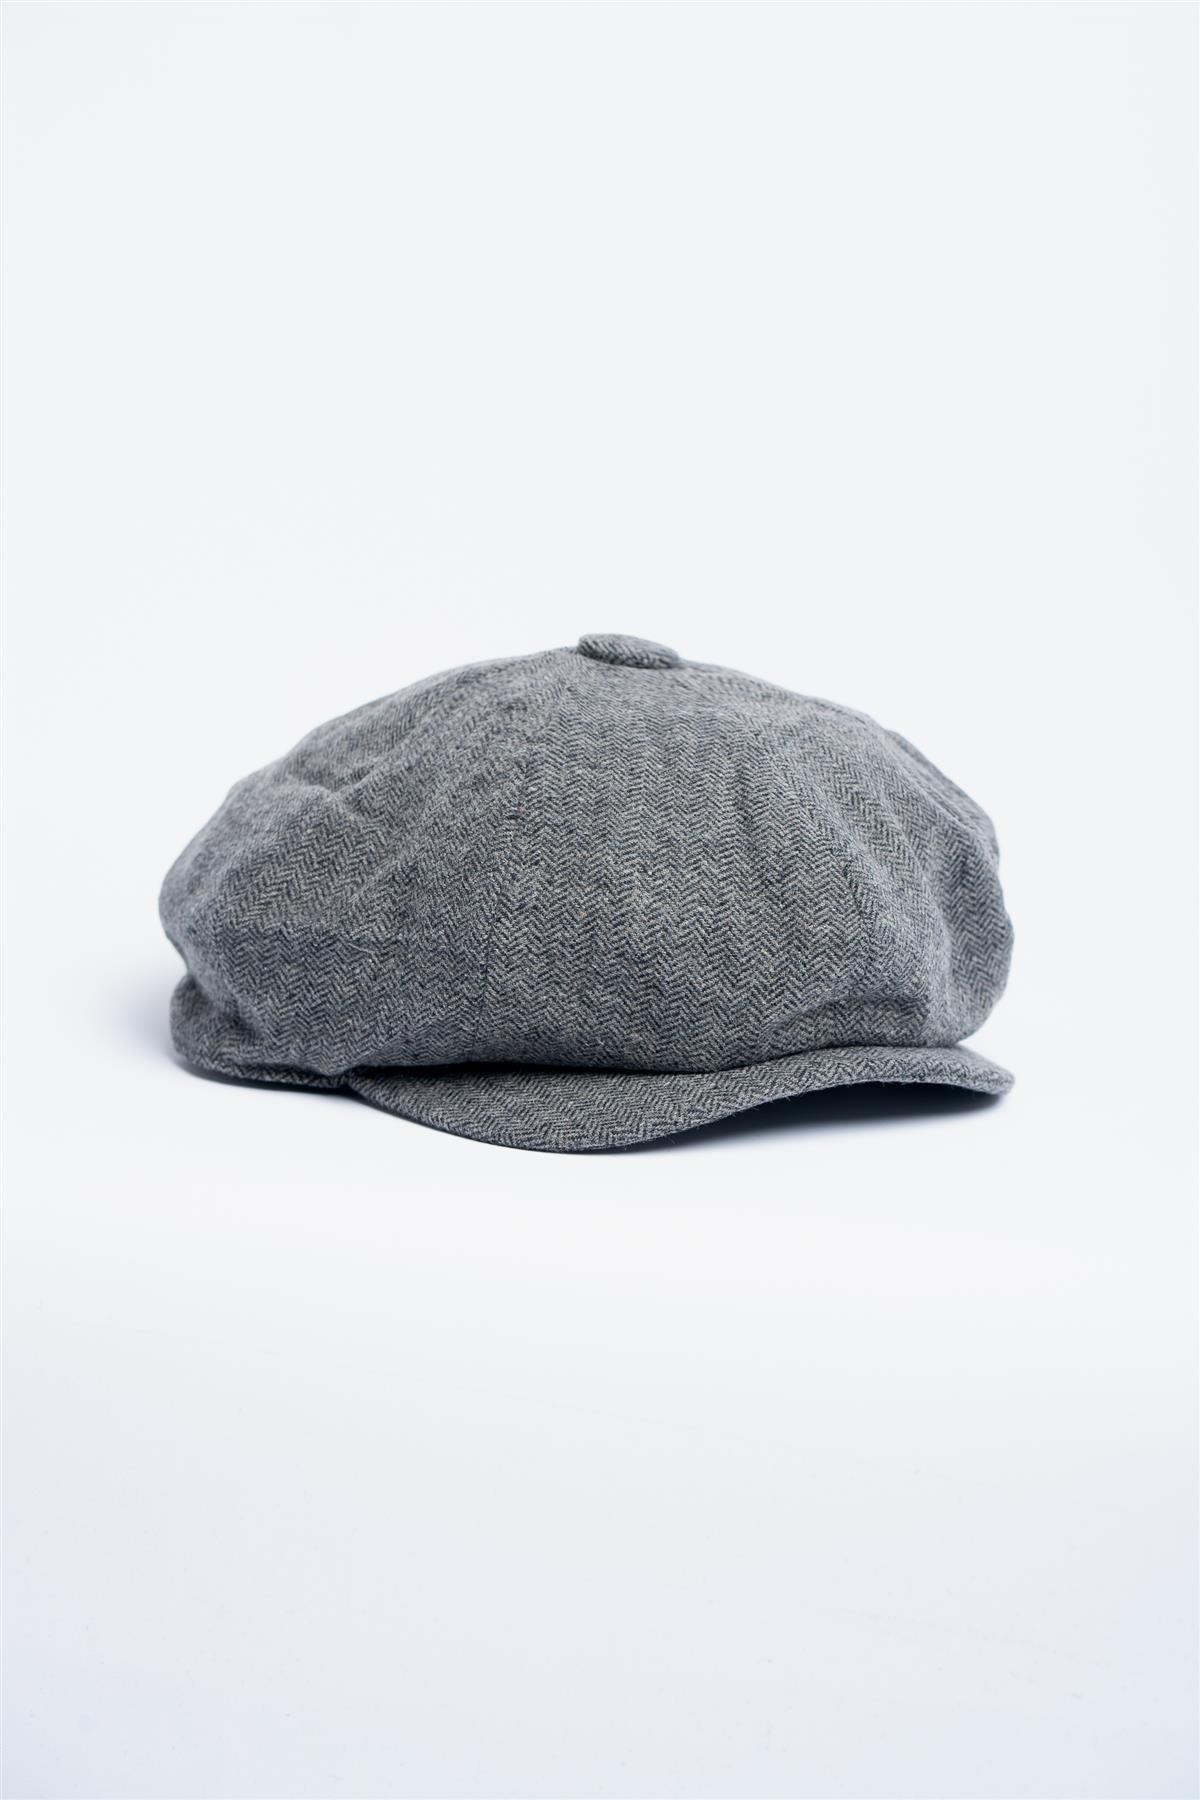 Martez grey tweed baker boy cap front